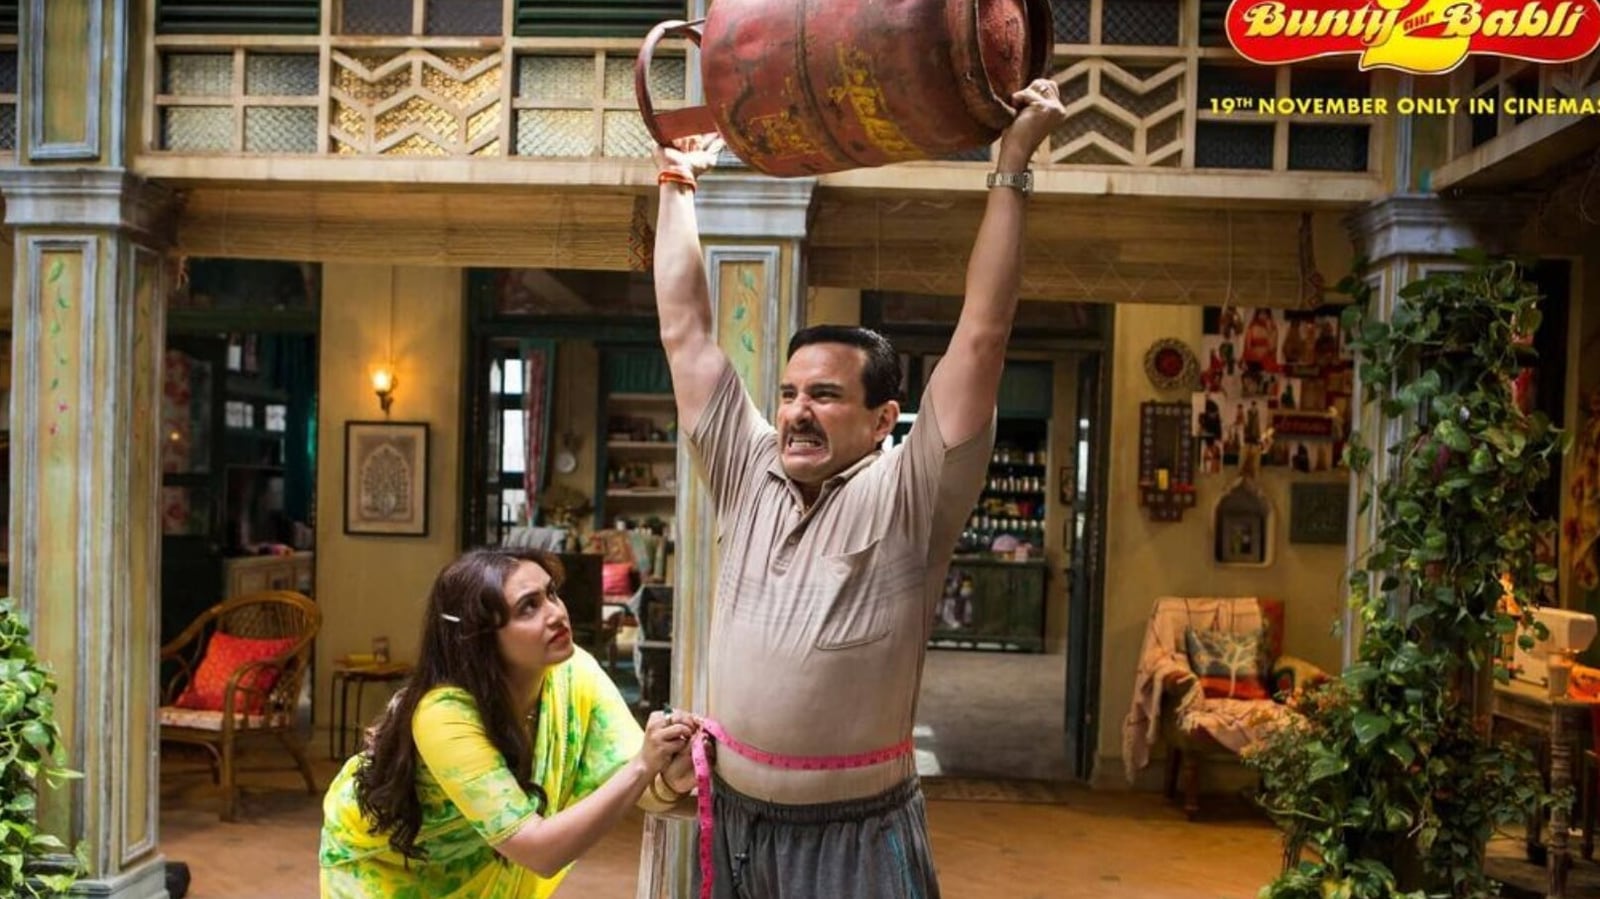 Saif Ali Khan&#39;s large paunch leaves Rani Mukerji unimpressed in new Bunty  Aur Babli 2 pic | Bollywood - Hindustan Times